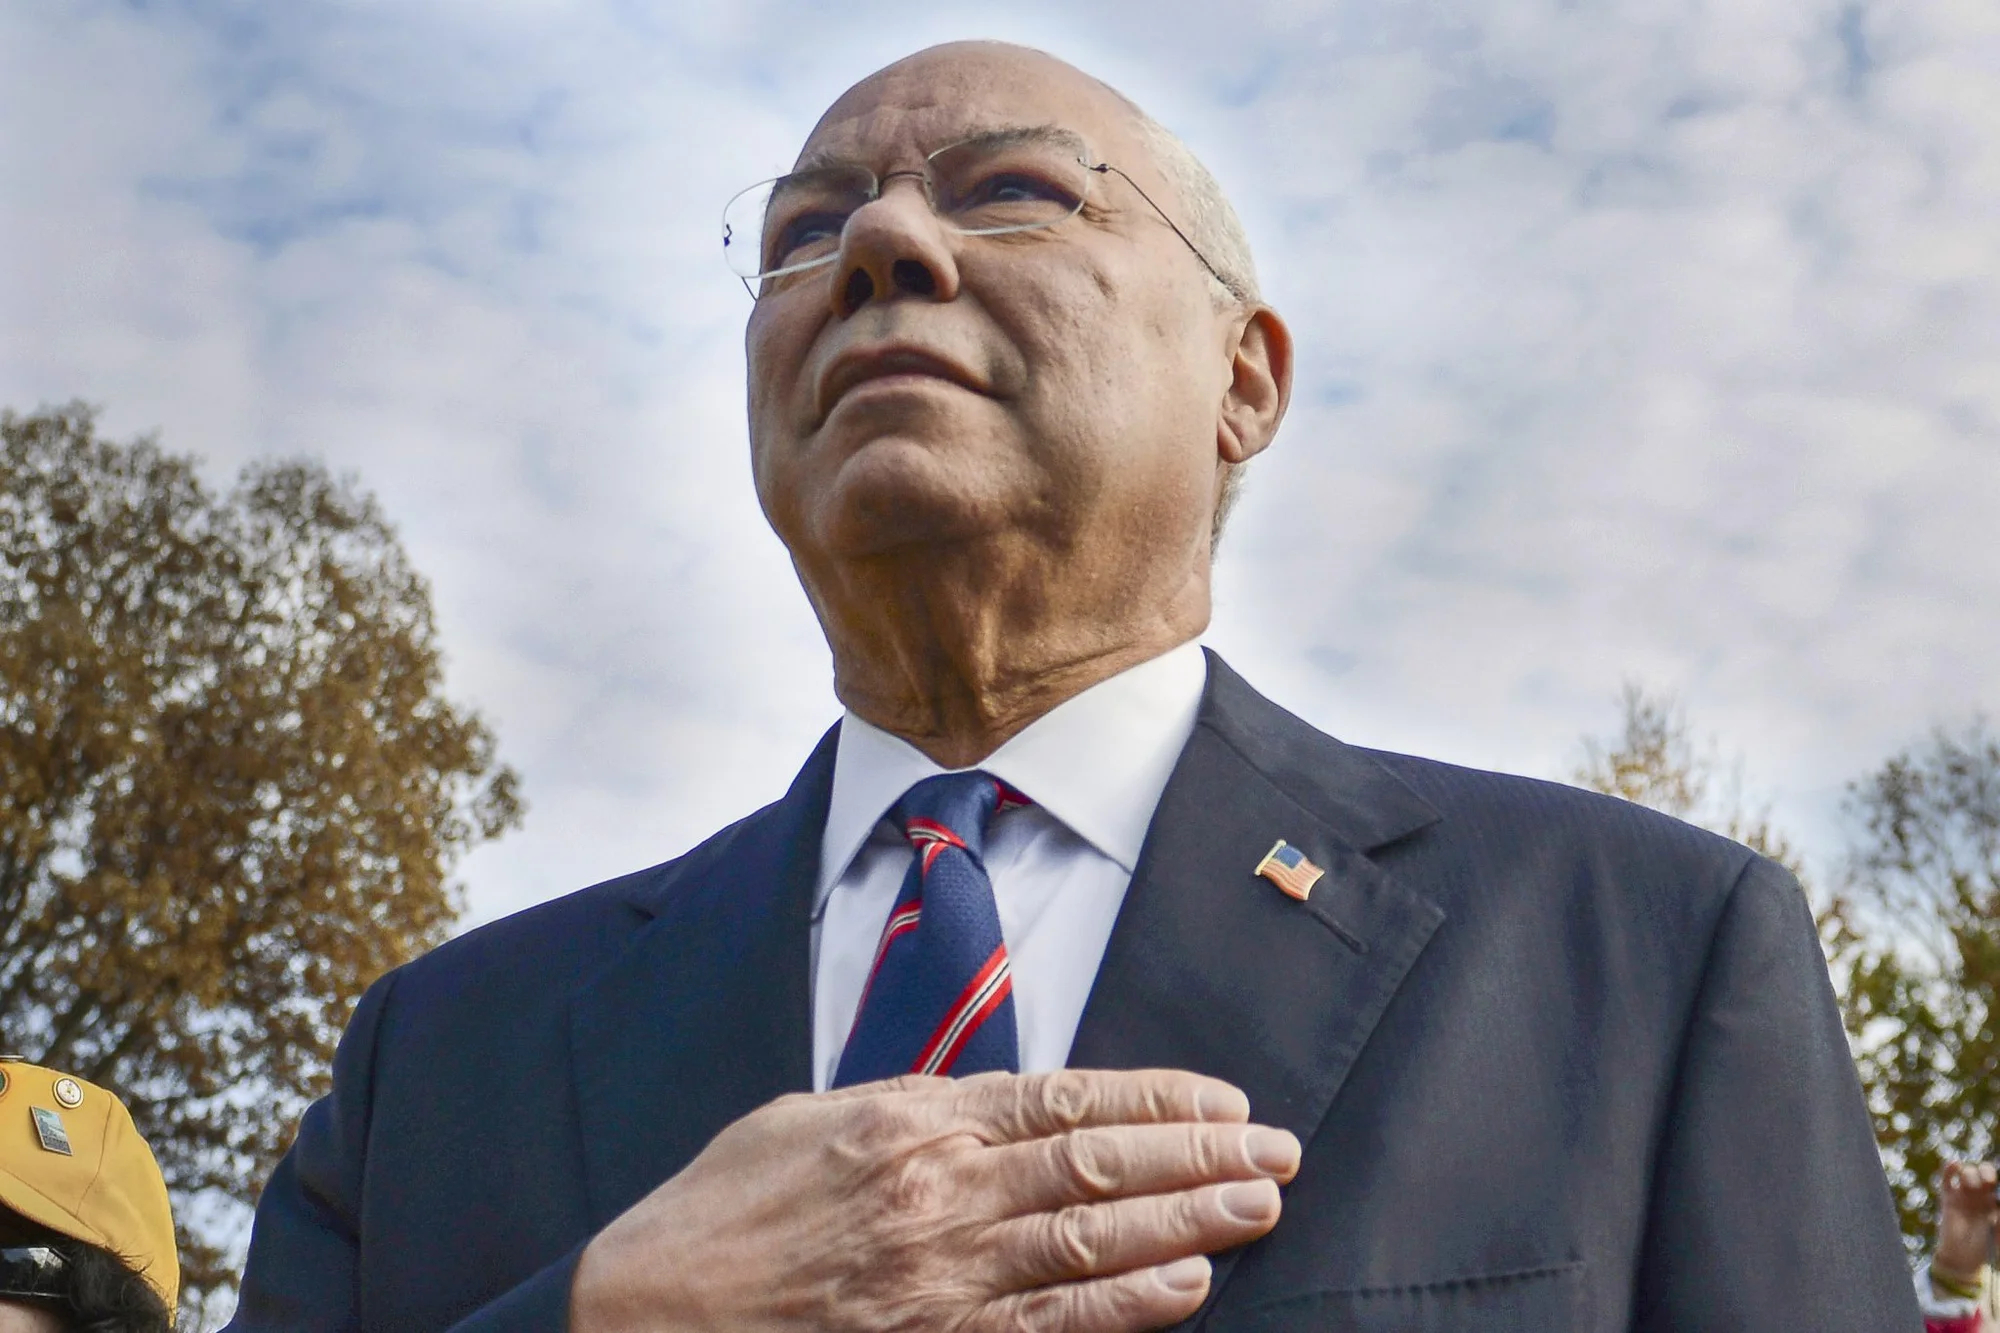 Gen. Colin Powell on Veterans Day